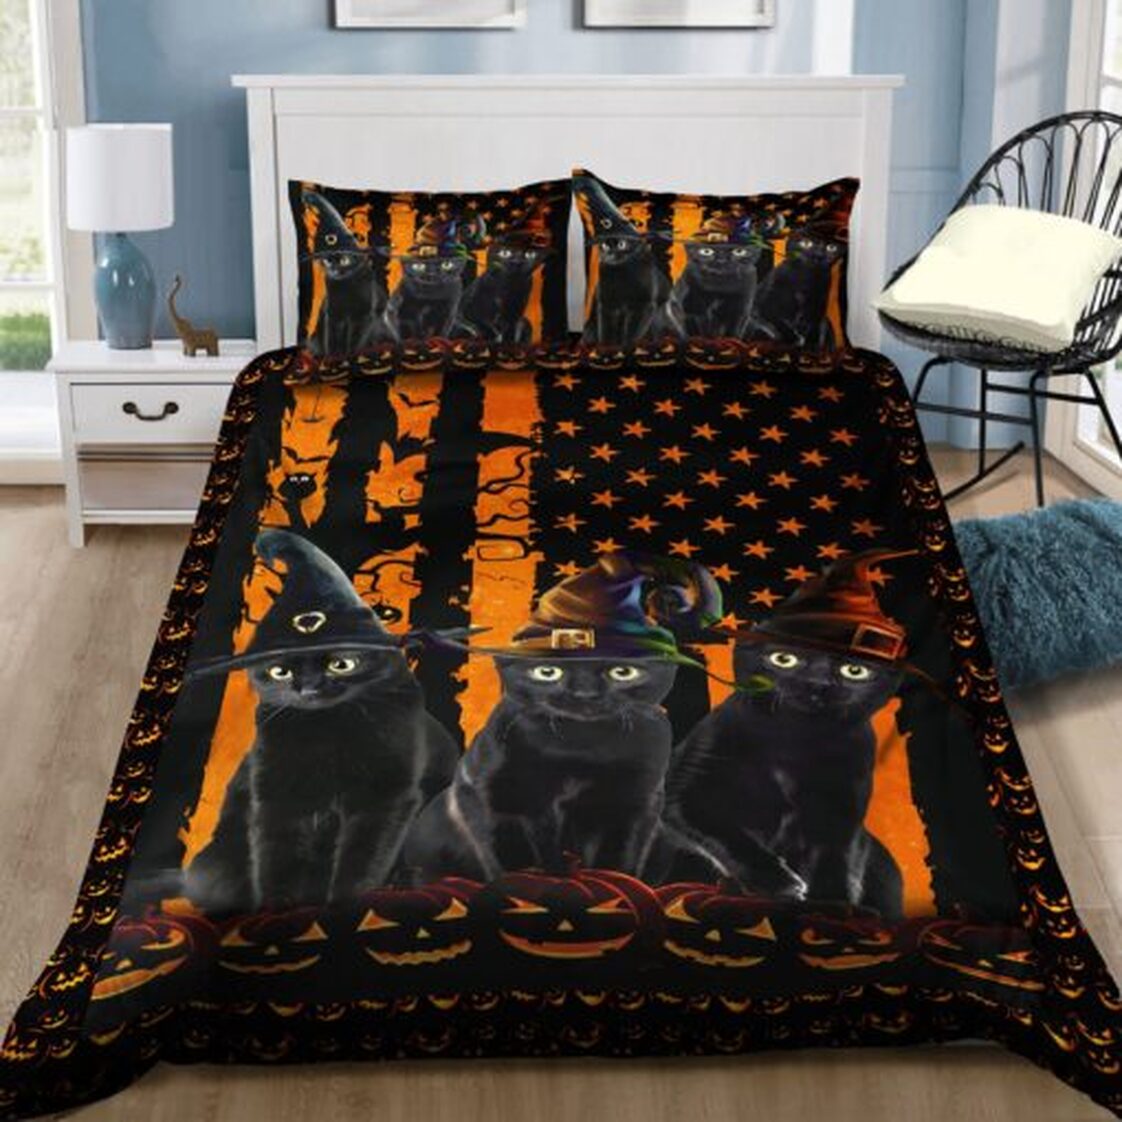 Three Black Cats Halloween Quilt Bedding Set - Flag Black Comforter Set Twin Queen King Size